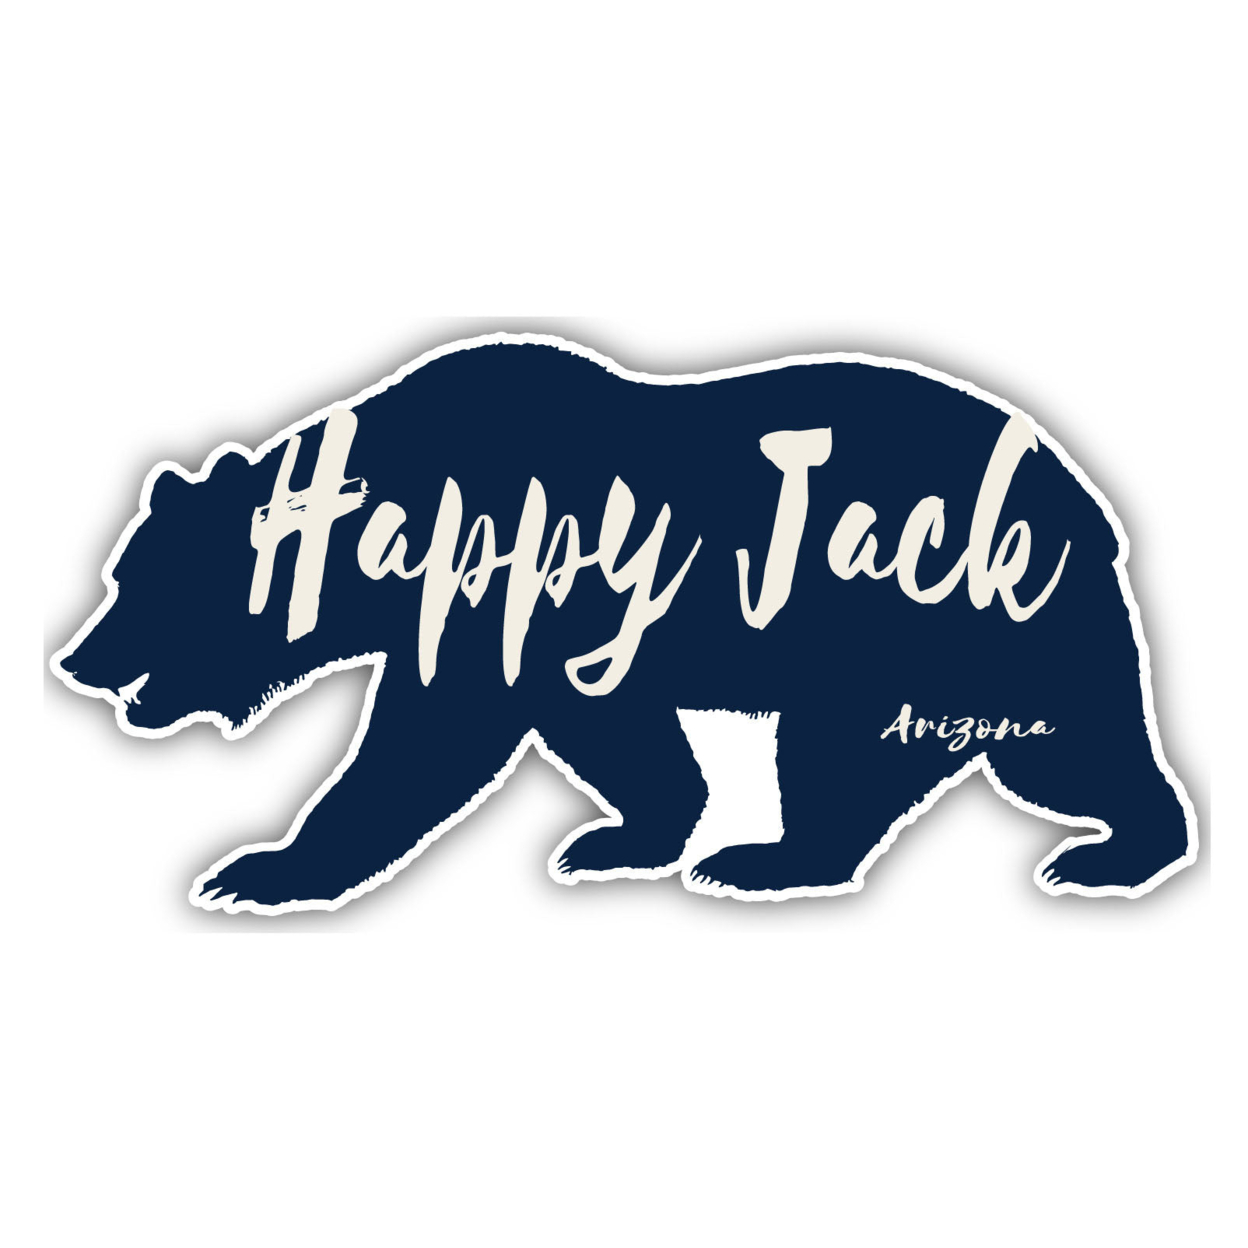 Happy Jack Arizona Souvenir Decorative Stickers (Choose Theme And Size) - Single Unit, 12-Inch, Tent